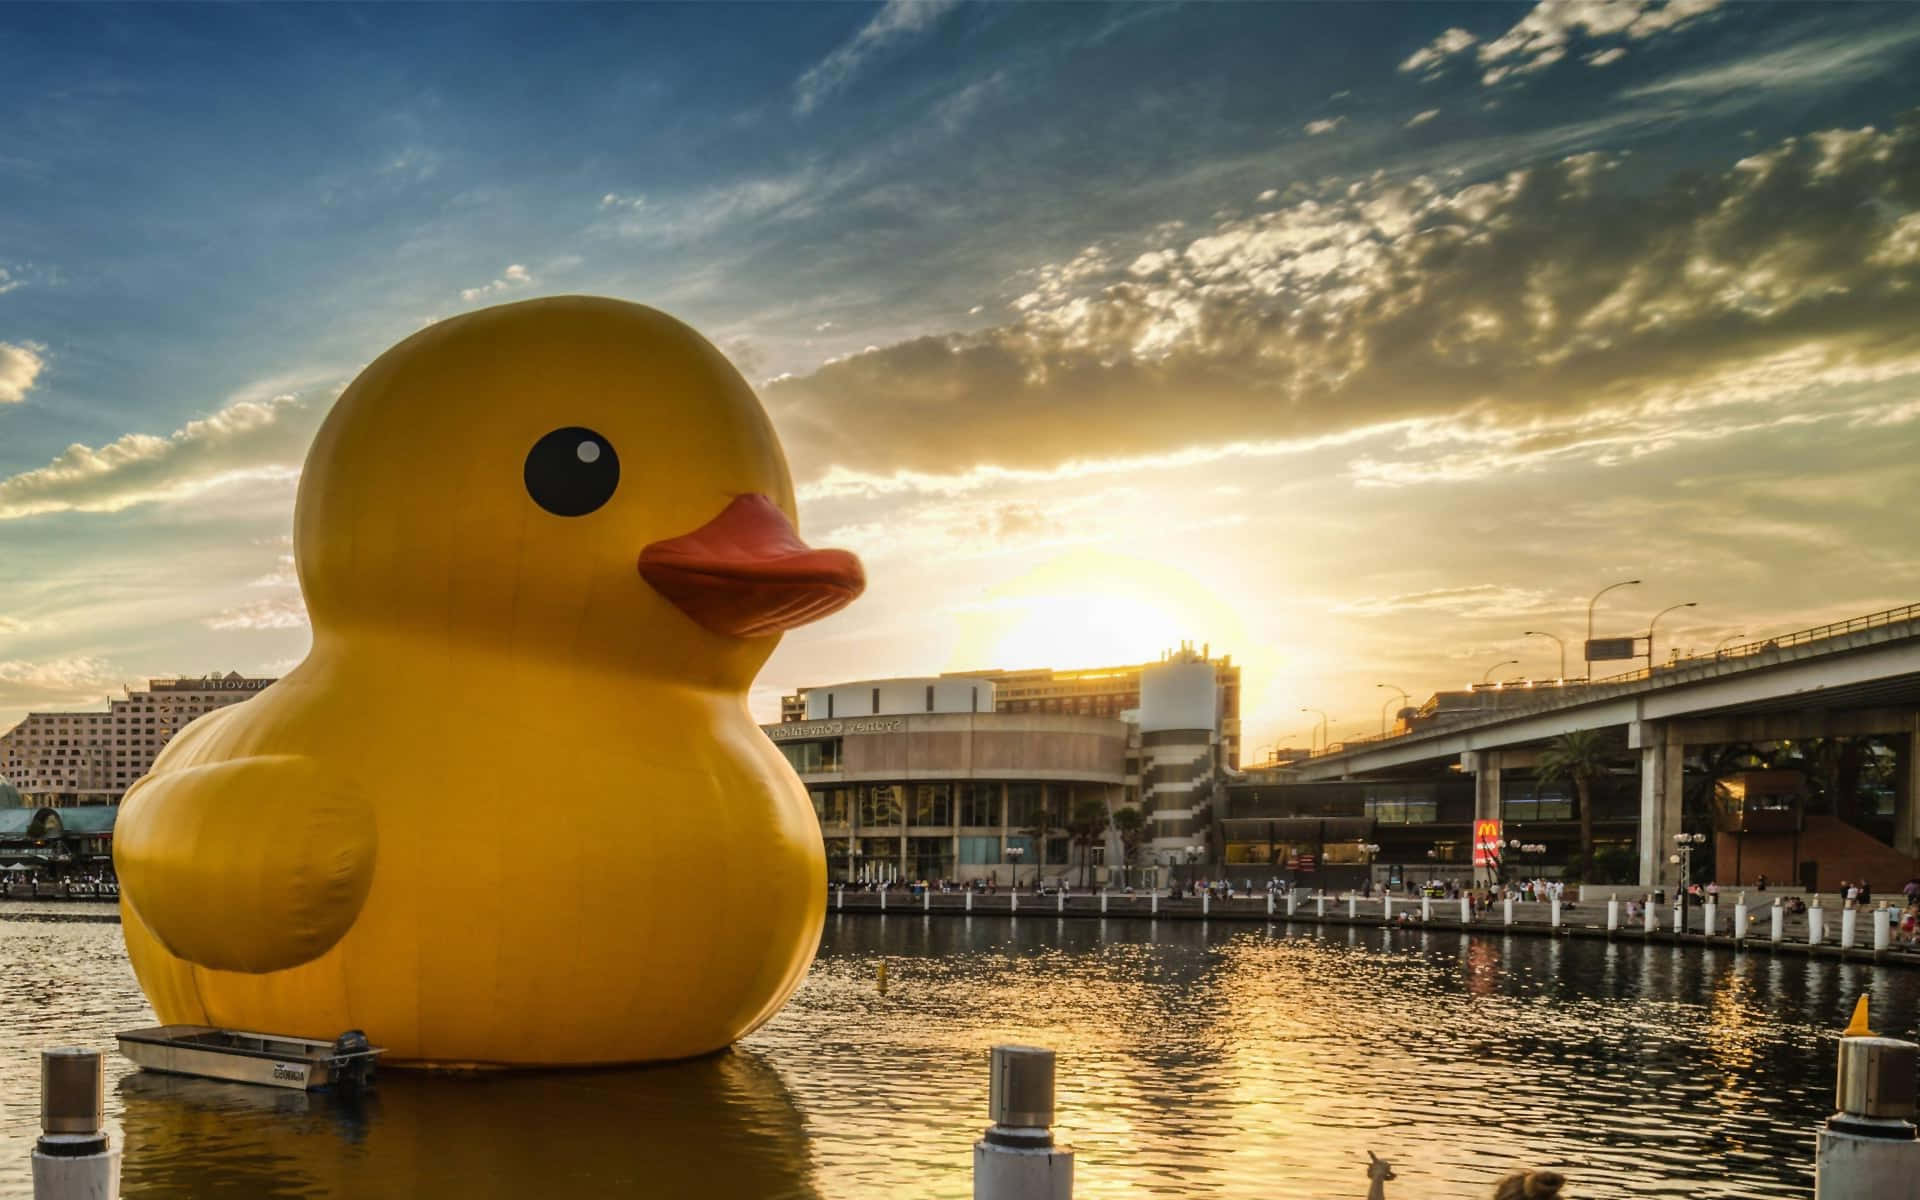 “Quack, Quack! It's my favorite time of day to take a dip!” Wallpaper